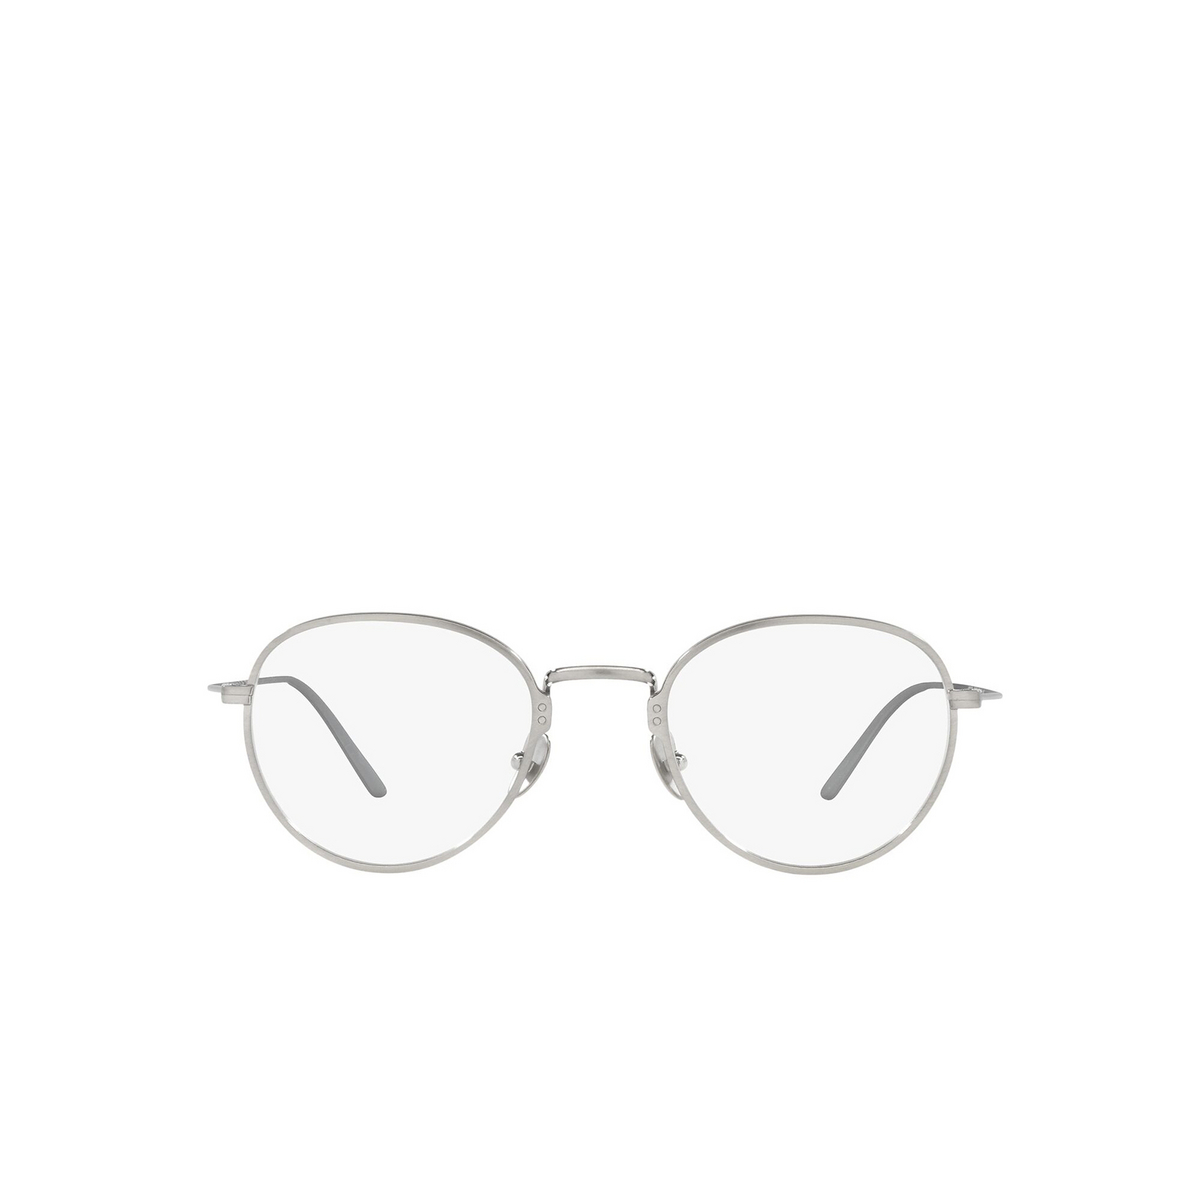 Prada® Oval Eyeglasses: PR 50YV color Satin Titanium 05Q1O1 - front view.